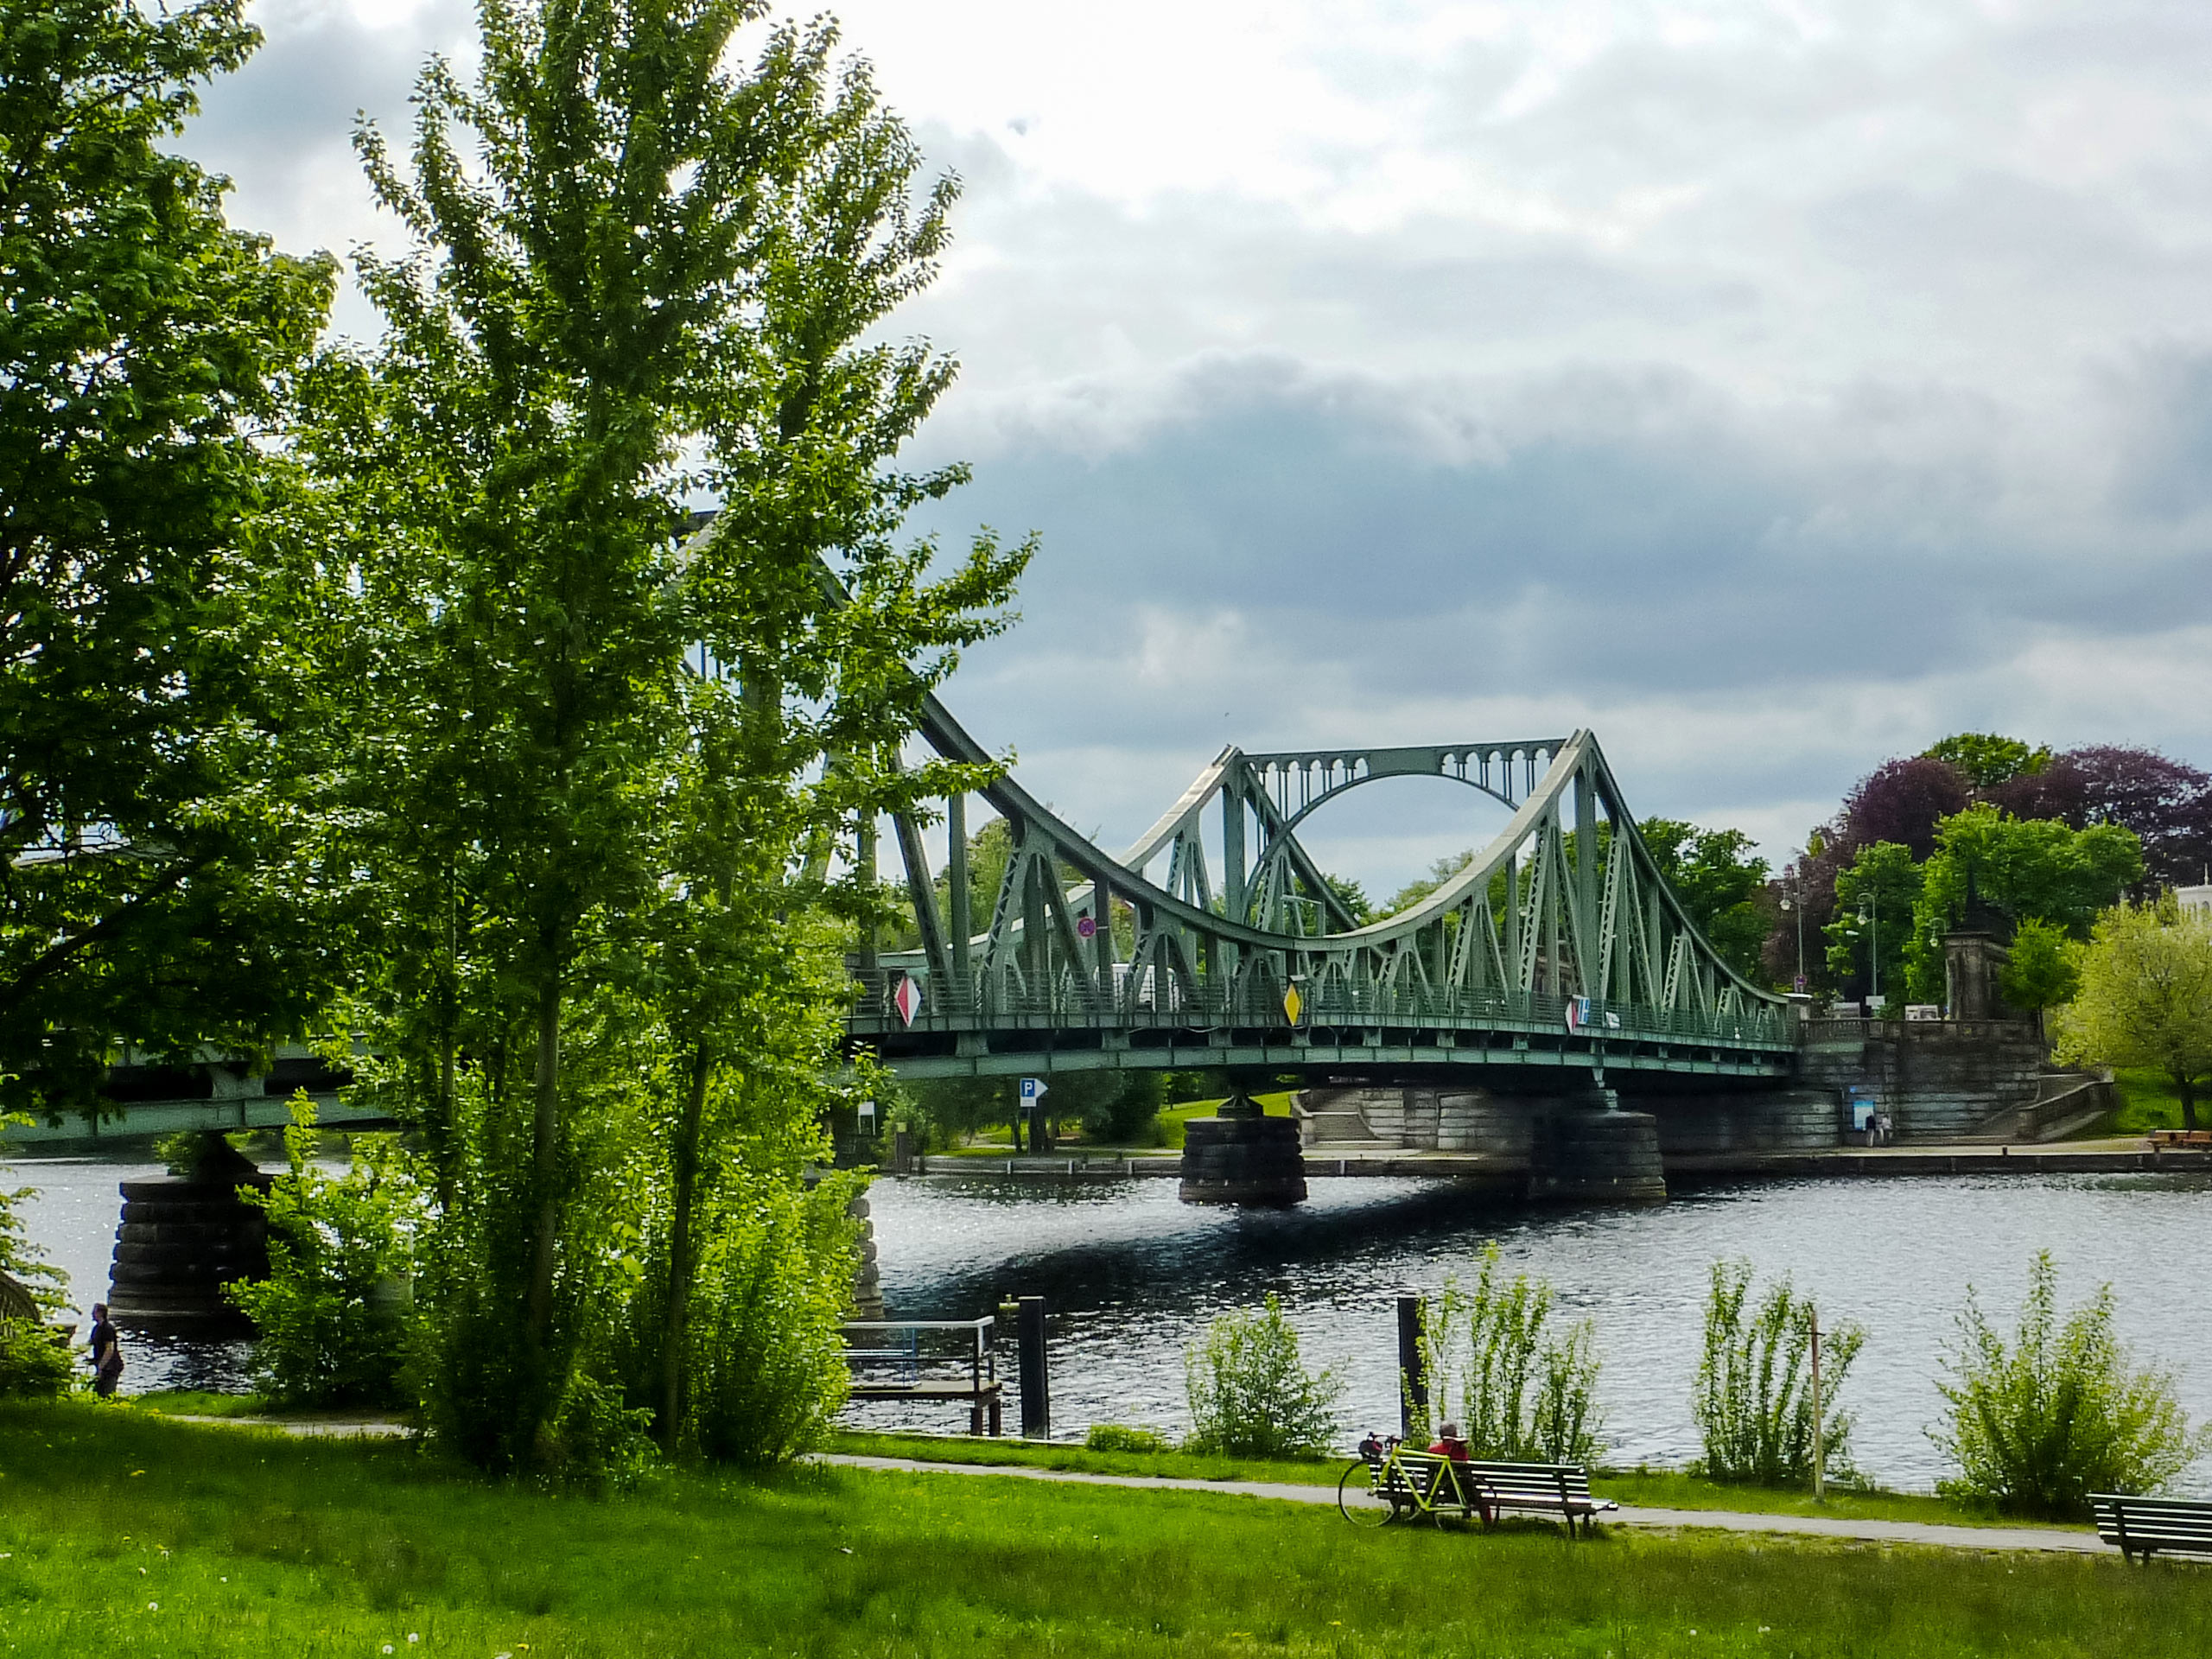 The Glienicke Bridge connecting Berlin with Potsdam